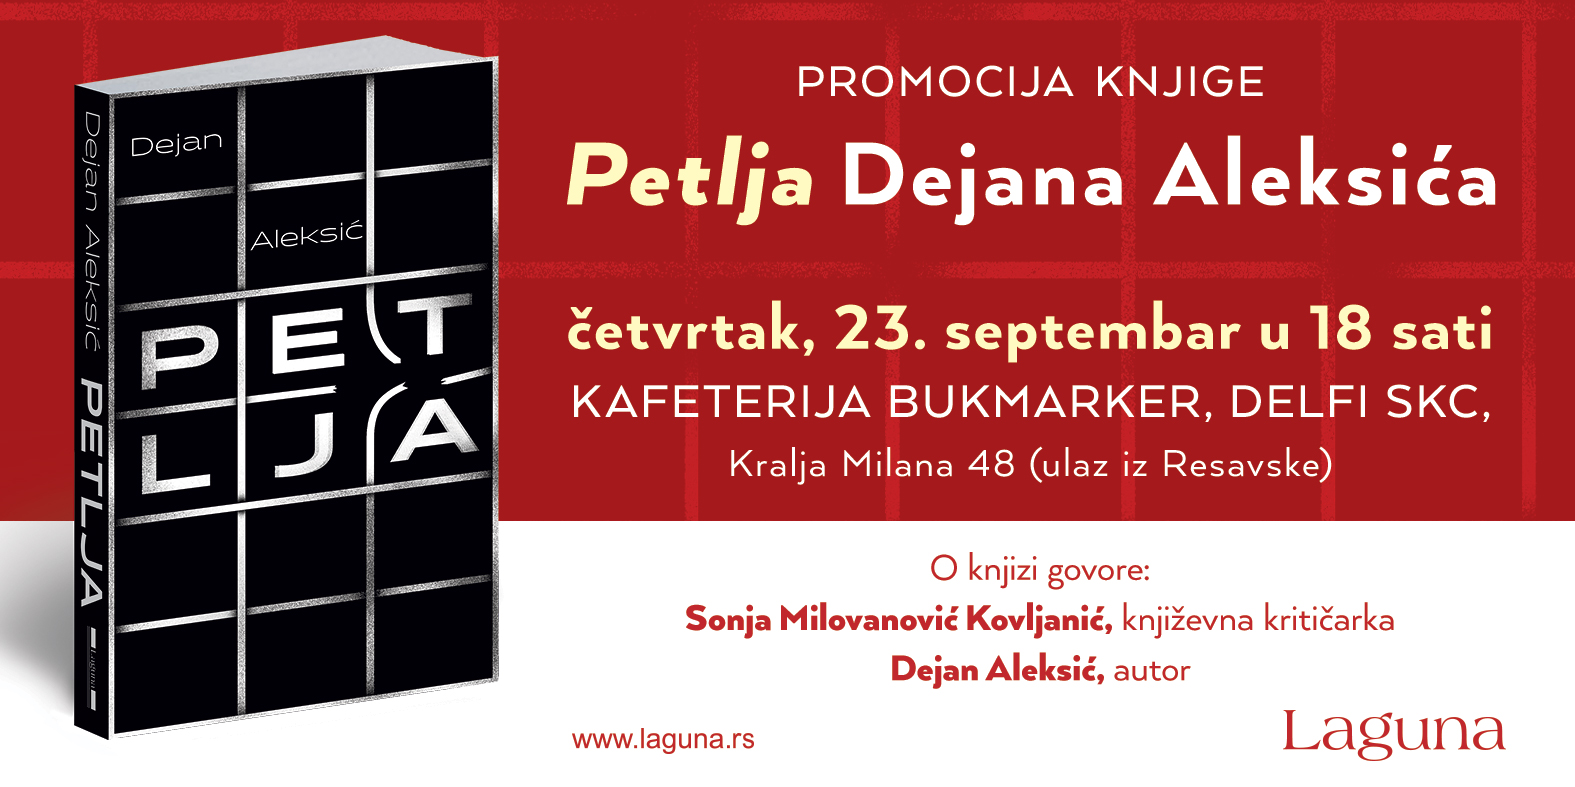 Promocija knjige &Petlja&, foto: Promo/Laguna